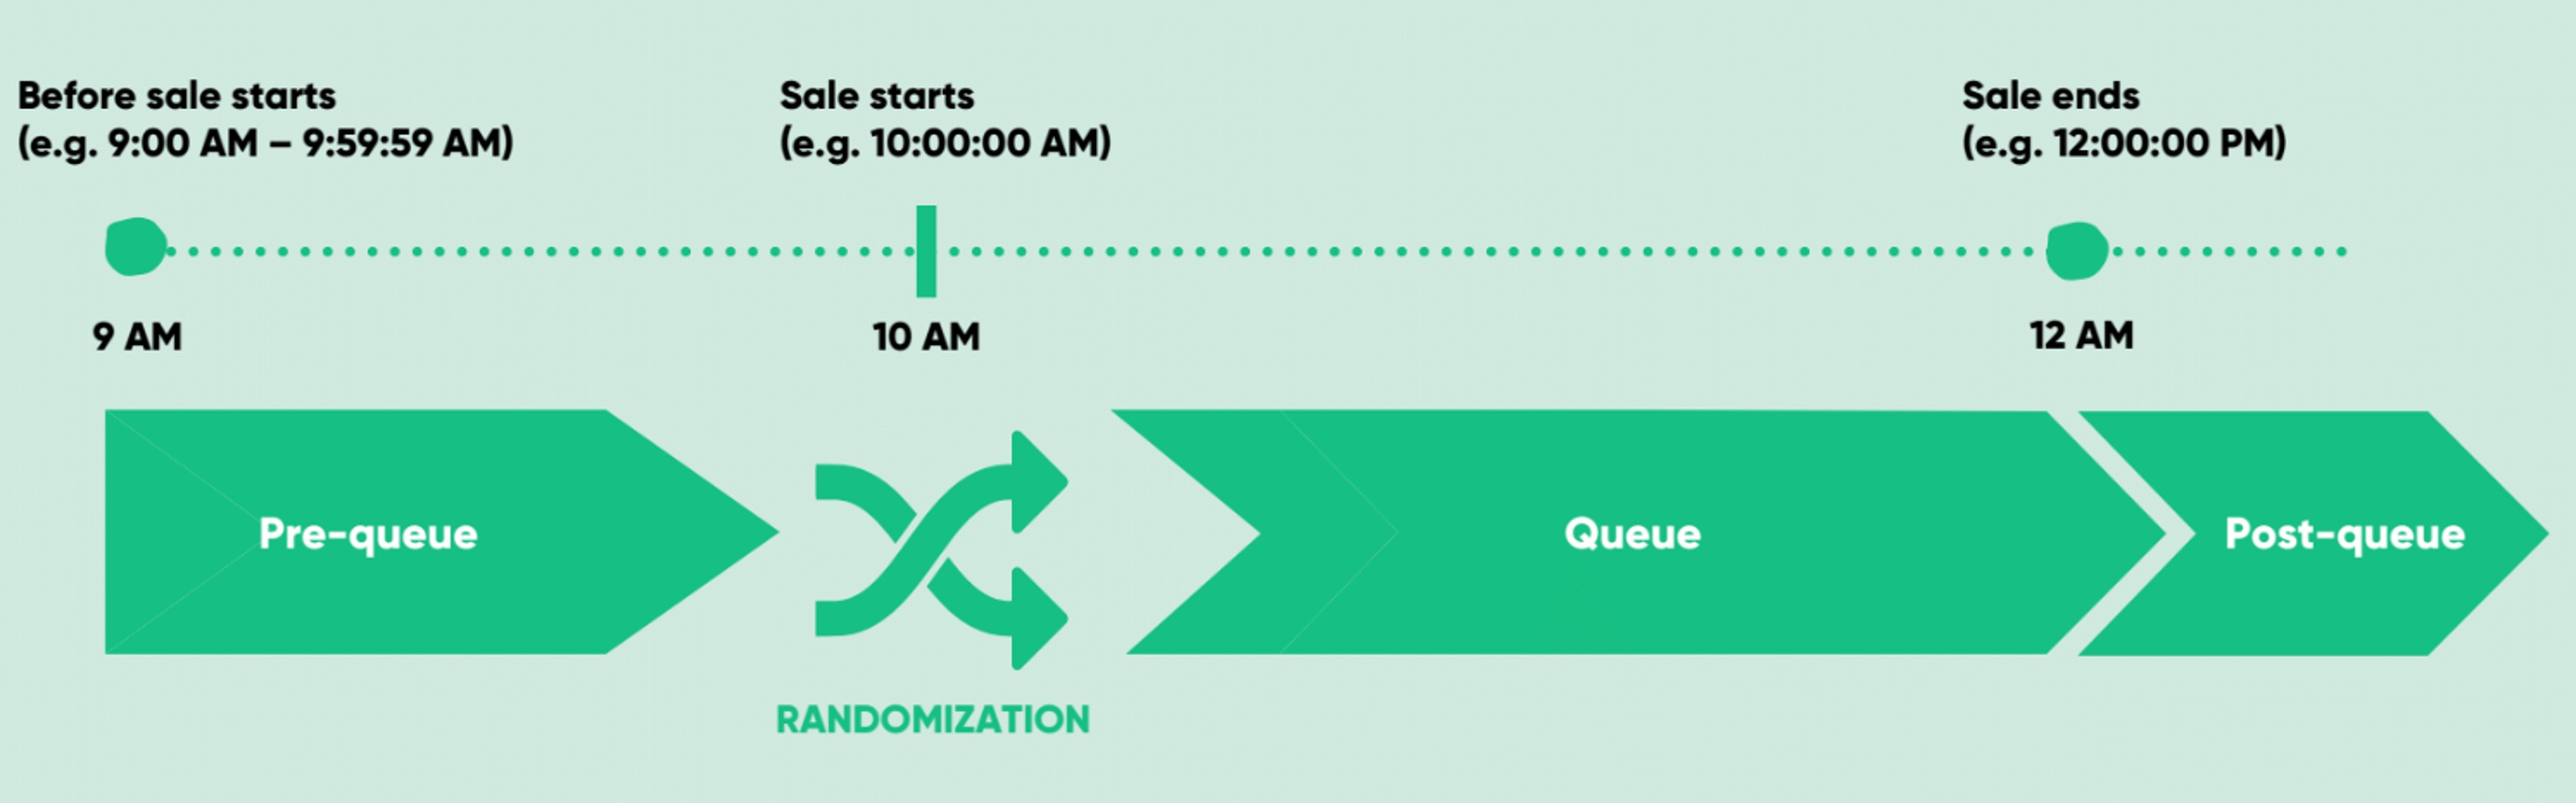 How the pre-queue randomization process works